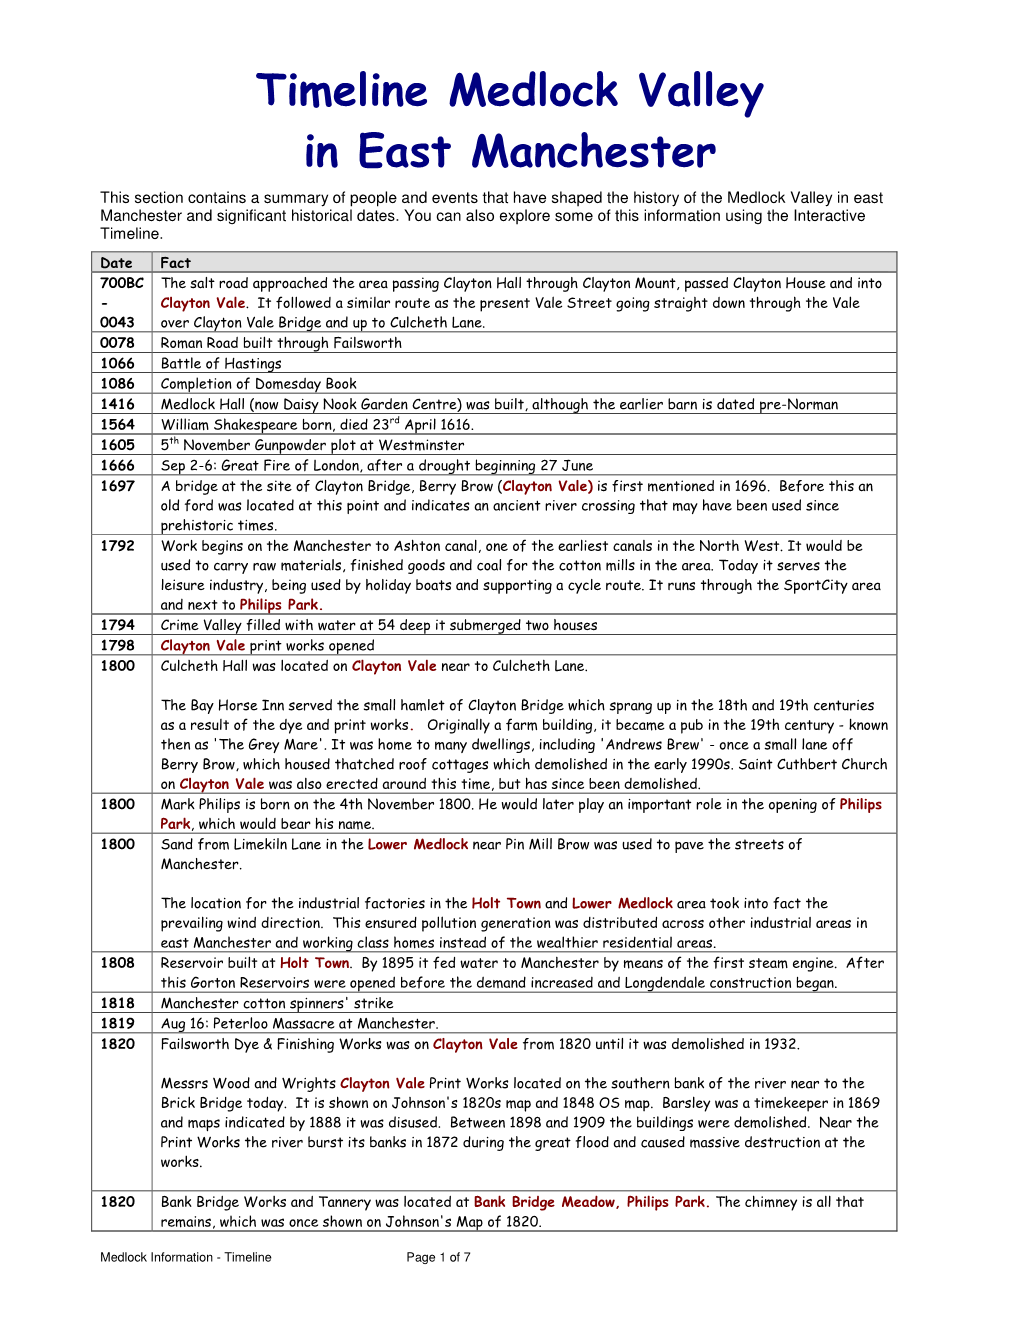 Timeline Medlock Valley in East Manchester